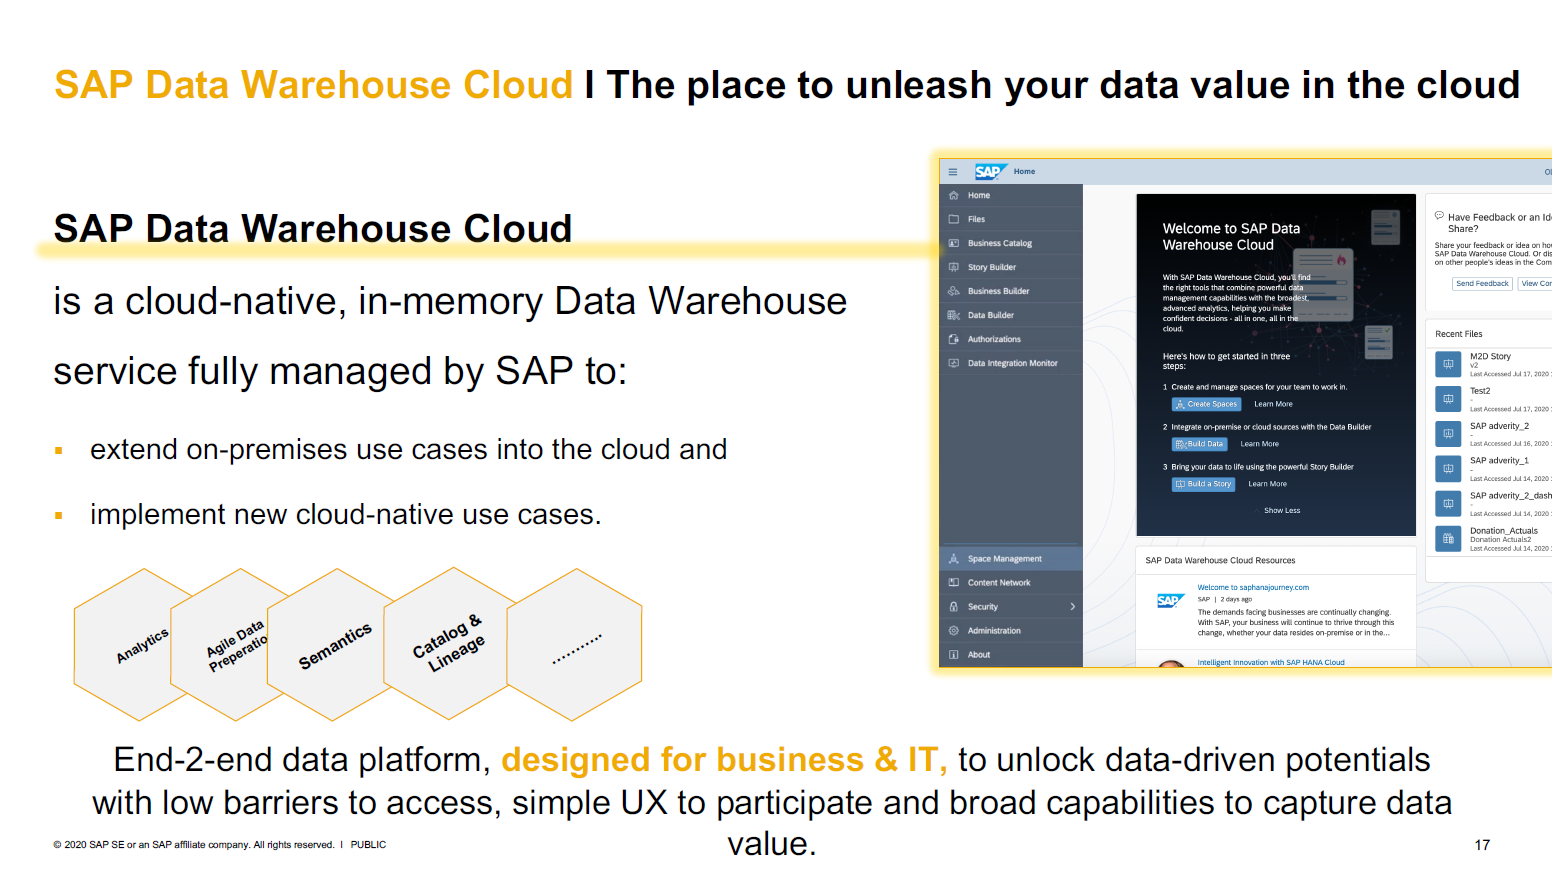 SAP Data Warehouse Cloud im Kern